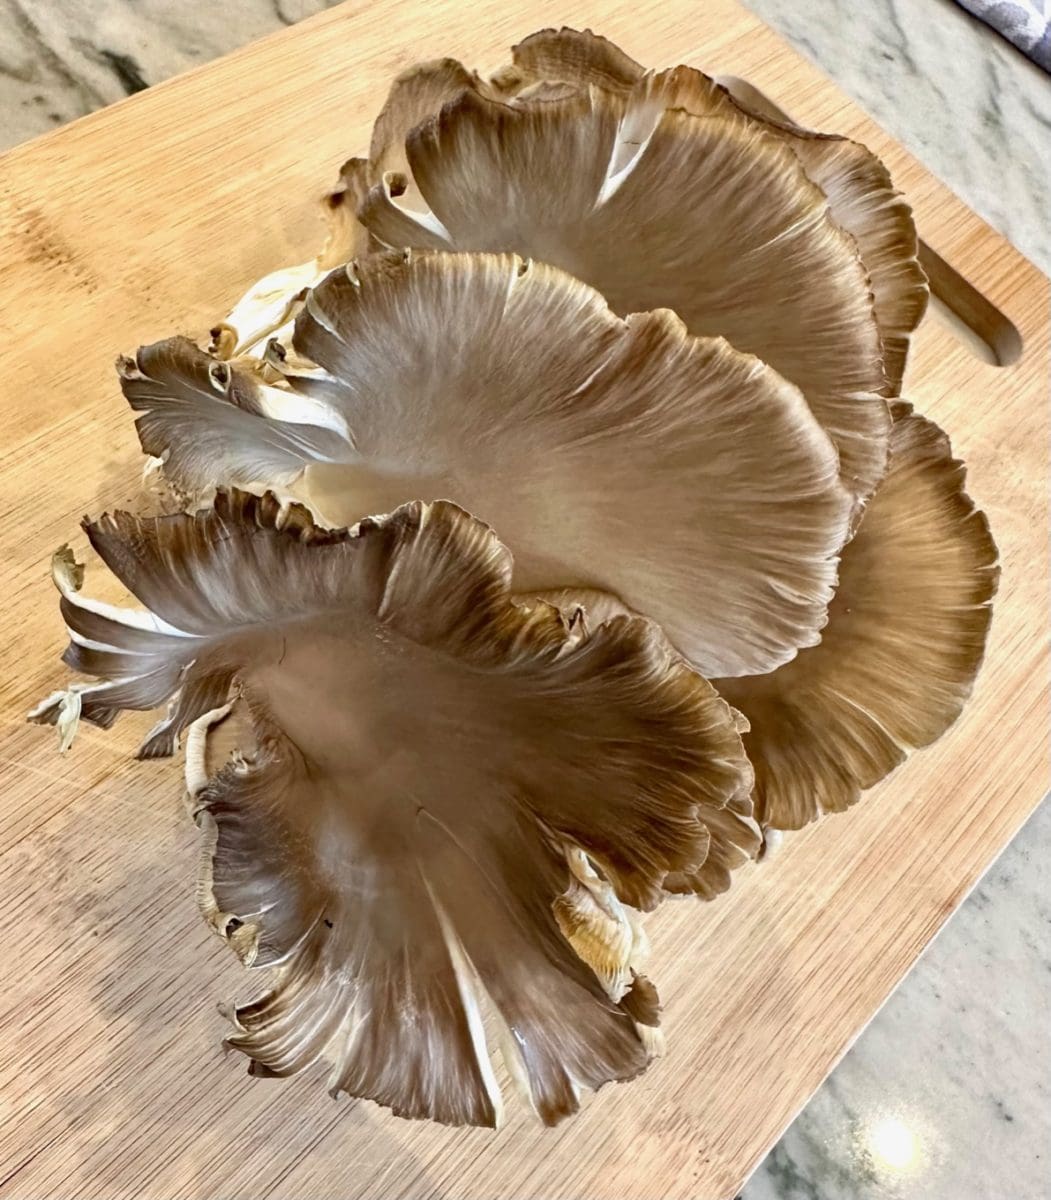 italian oyster mushrooms